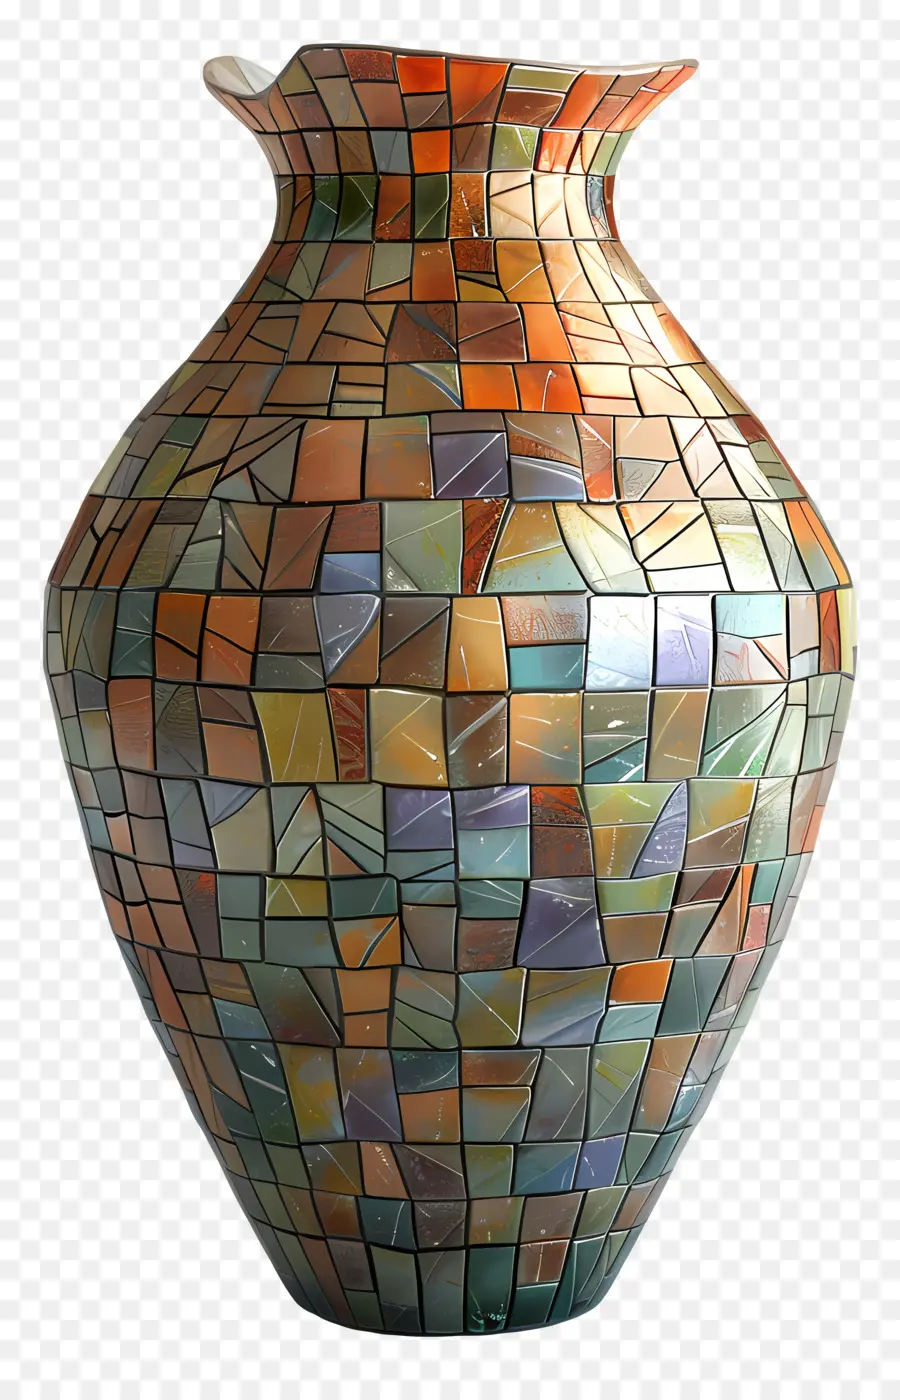 Mosaikvase große Keramikvase Mosaikfliesen farbenfrohe Muster strukturierte Oberfläche - Farbenfrohe mosaische Keramikvase mit strukturierter Oberfläche